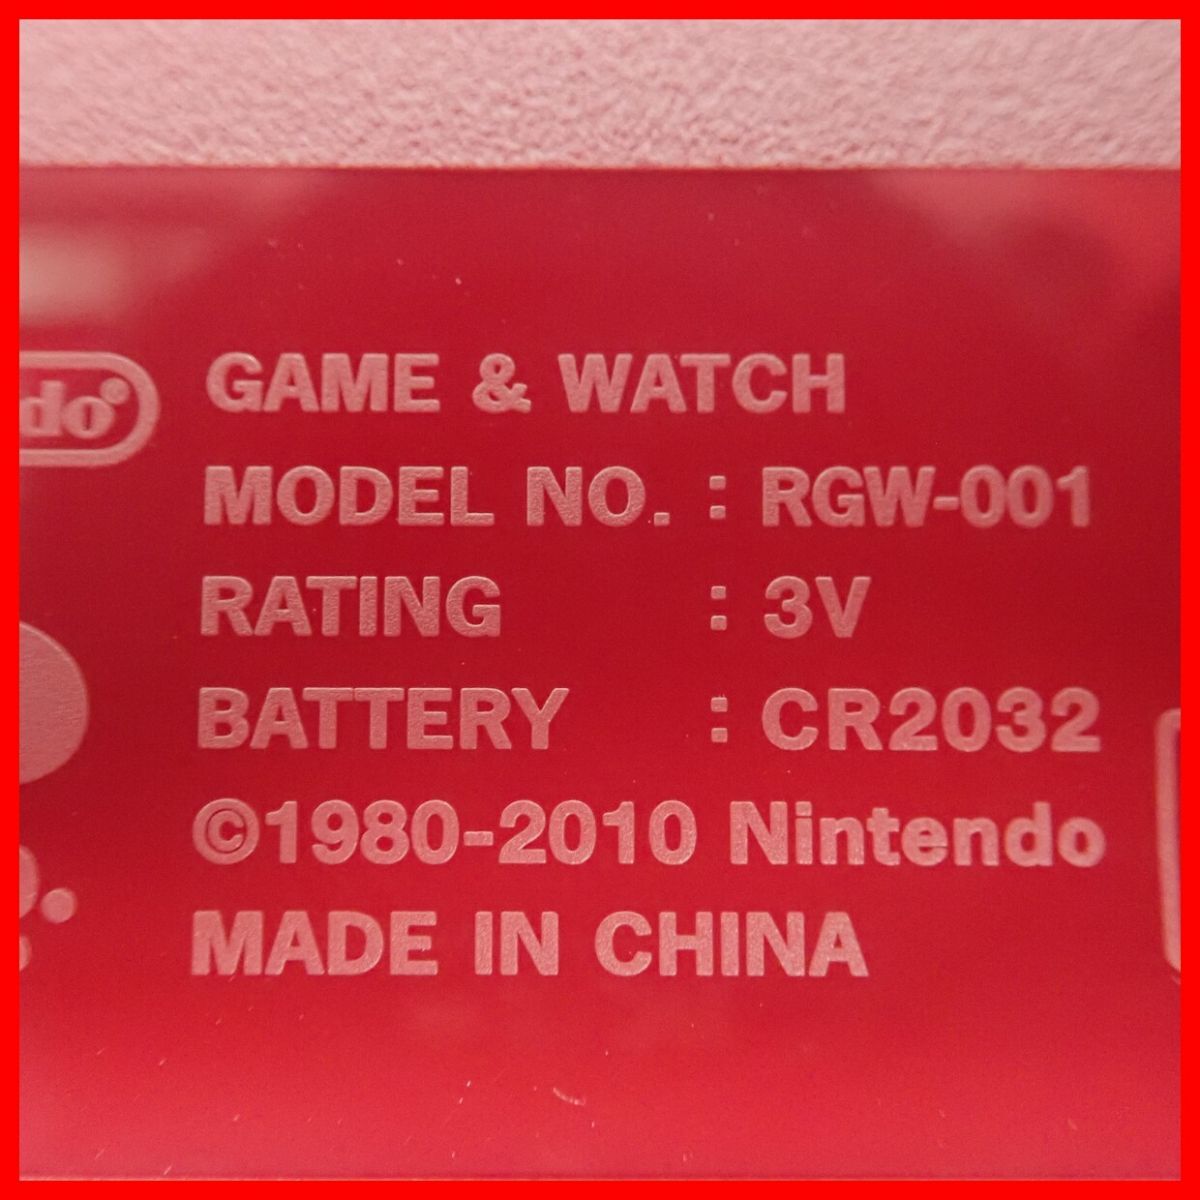  рабочий товар GAME&WATCH BALL Game & Watch мяч Club Nintendo переиздание RGW-001 корпус коробка мнение есть Nintendo nintendo club.nintendo[PP